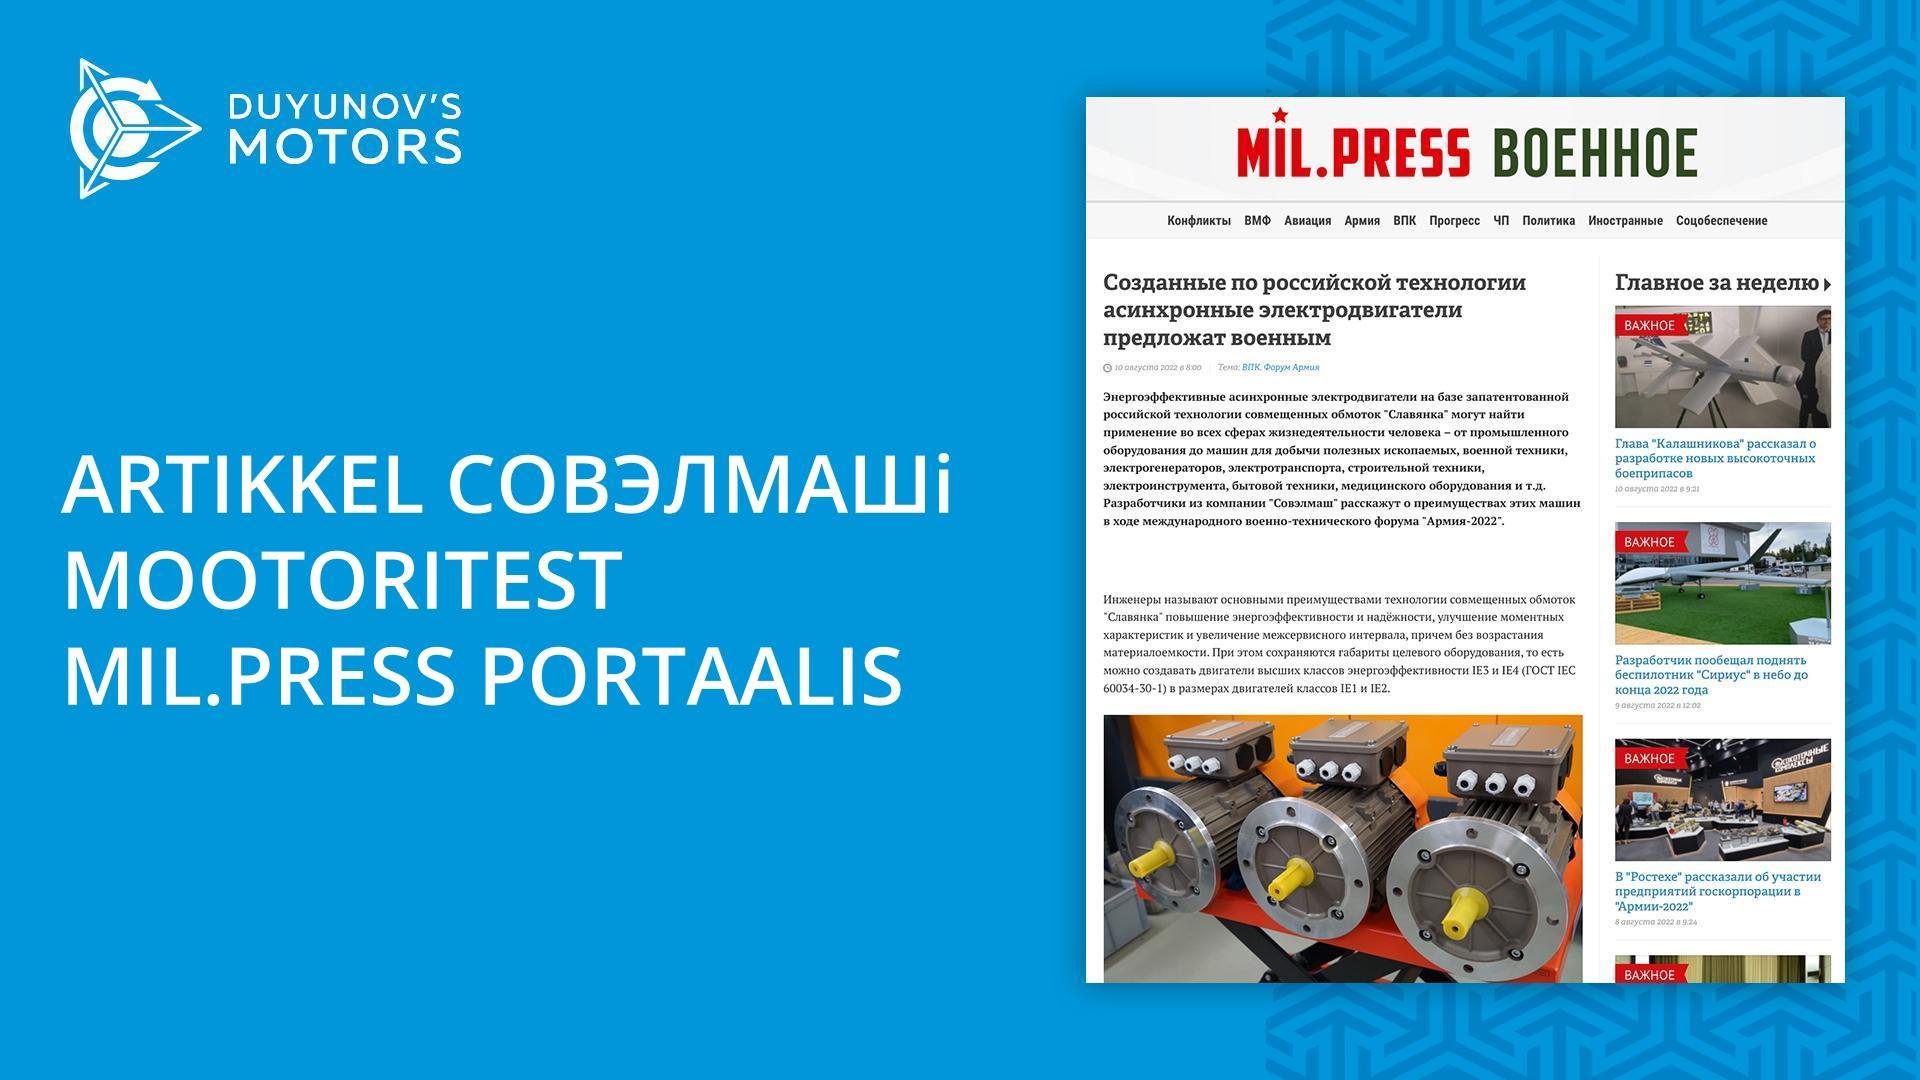 Uus artikkel Совэлмашi mootorite kohta informagentuuris Mil.Press Военное